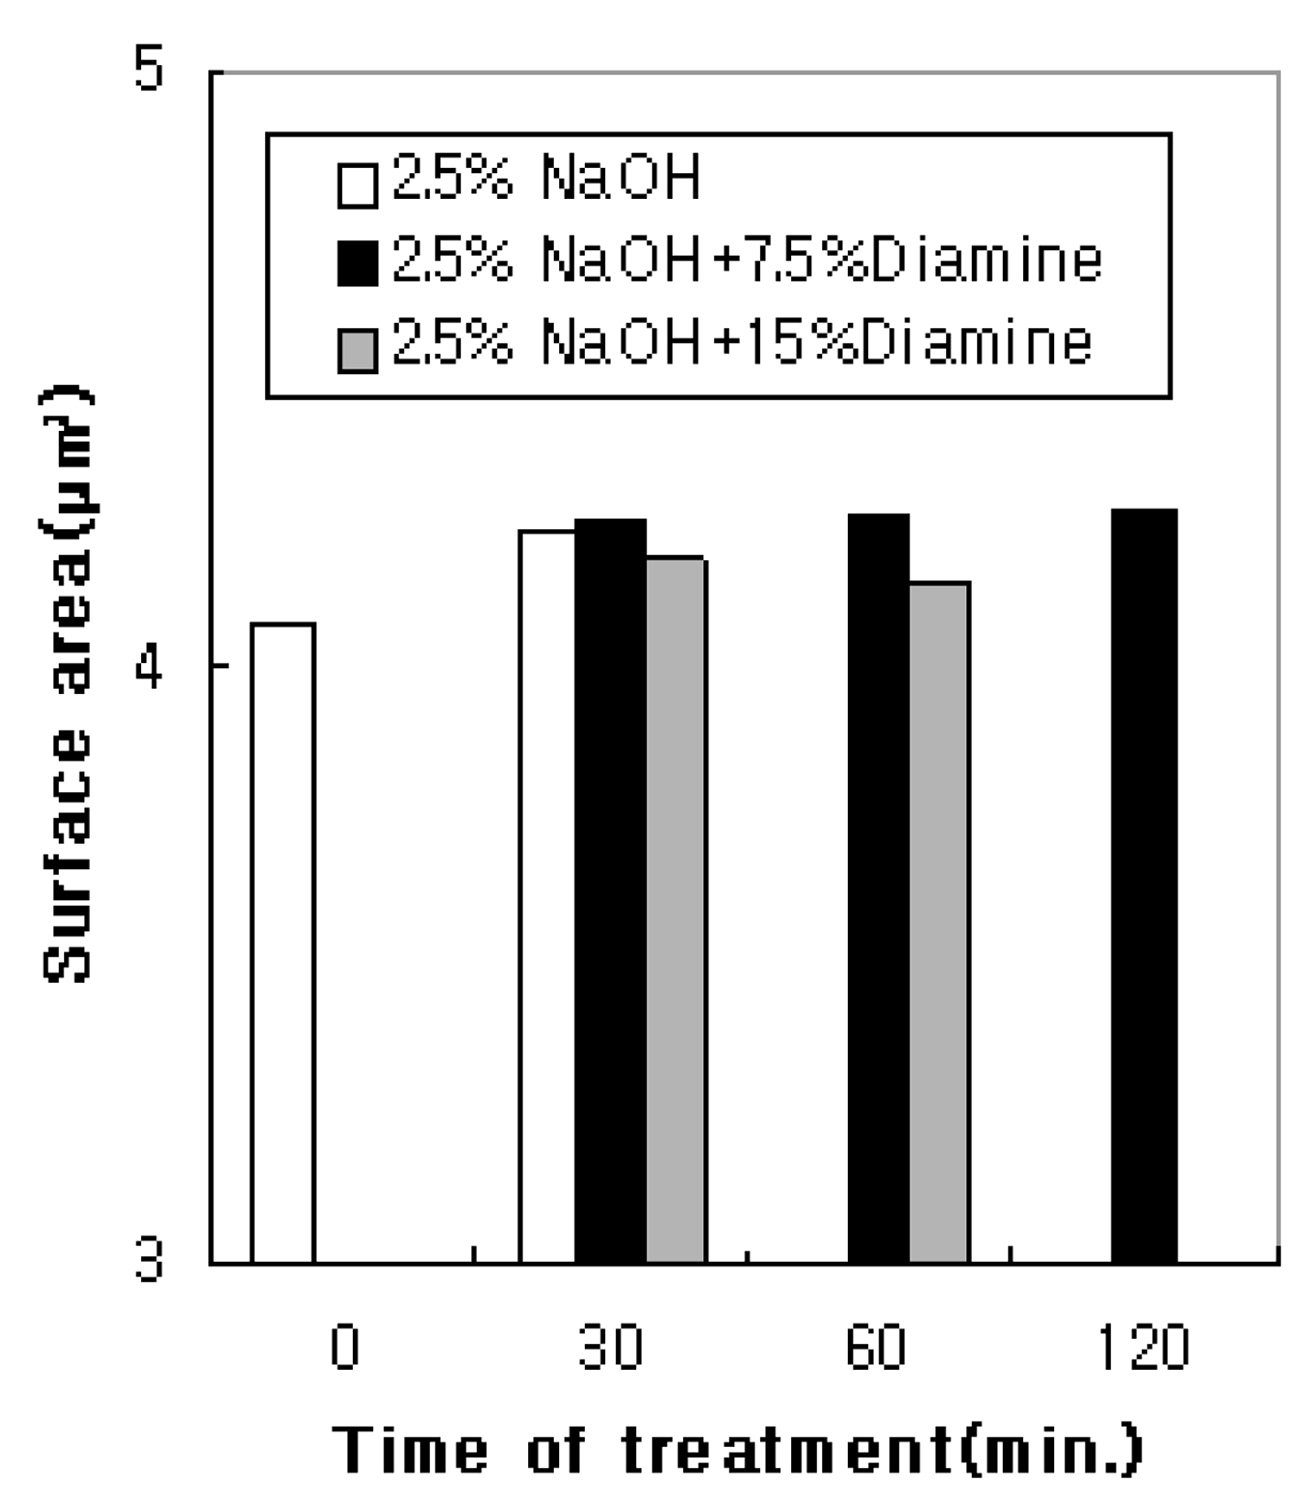 The surface area of PET film treated with NaOH or NaOH+ethylene diamine.